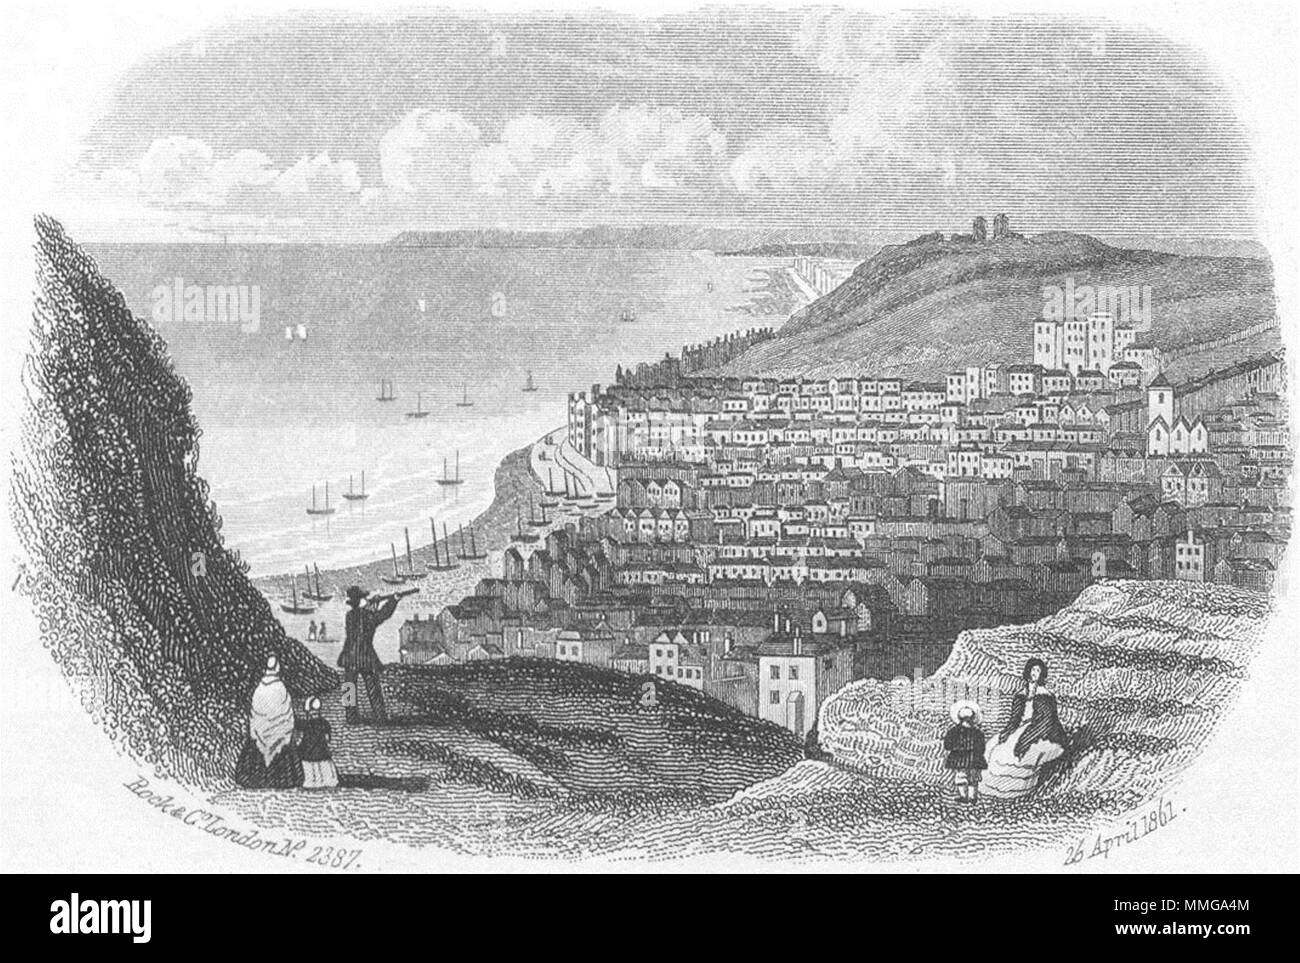 SUSSEX. Hastings Beachy Head & Pevensey Bay c1855 antica immagine di stampa Foto Stock